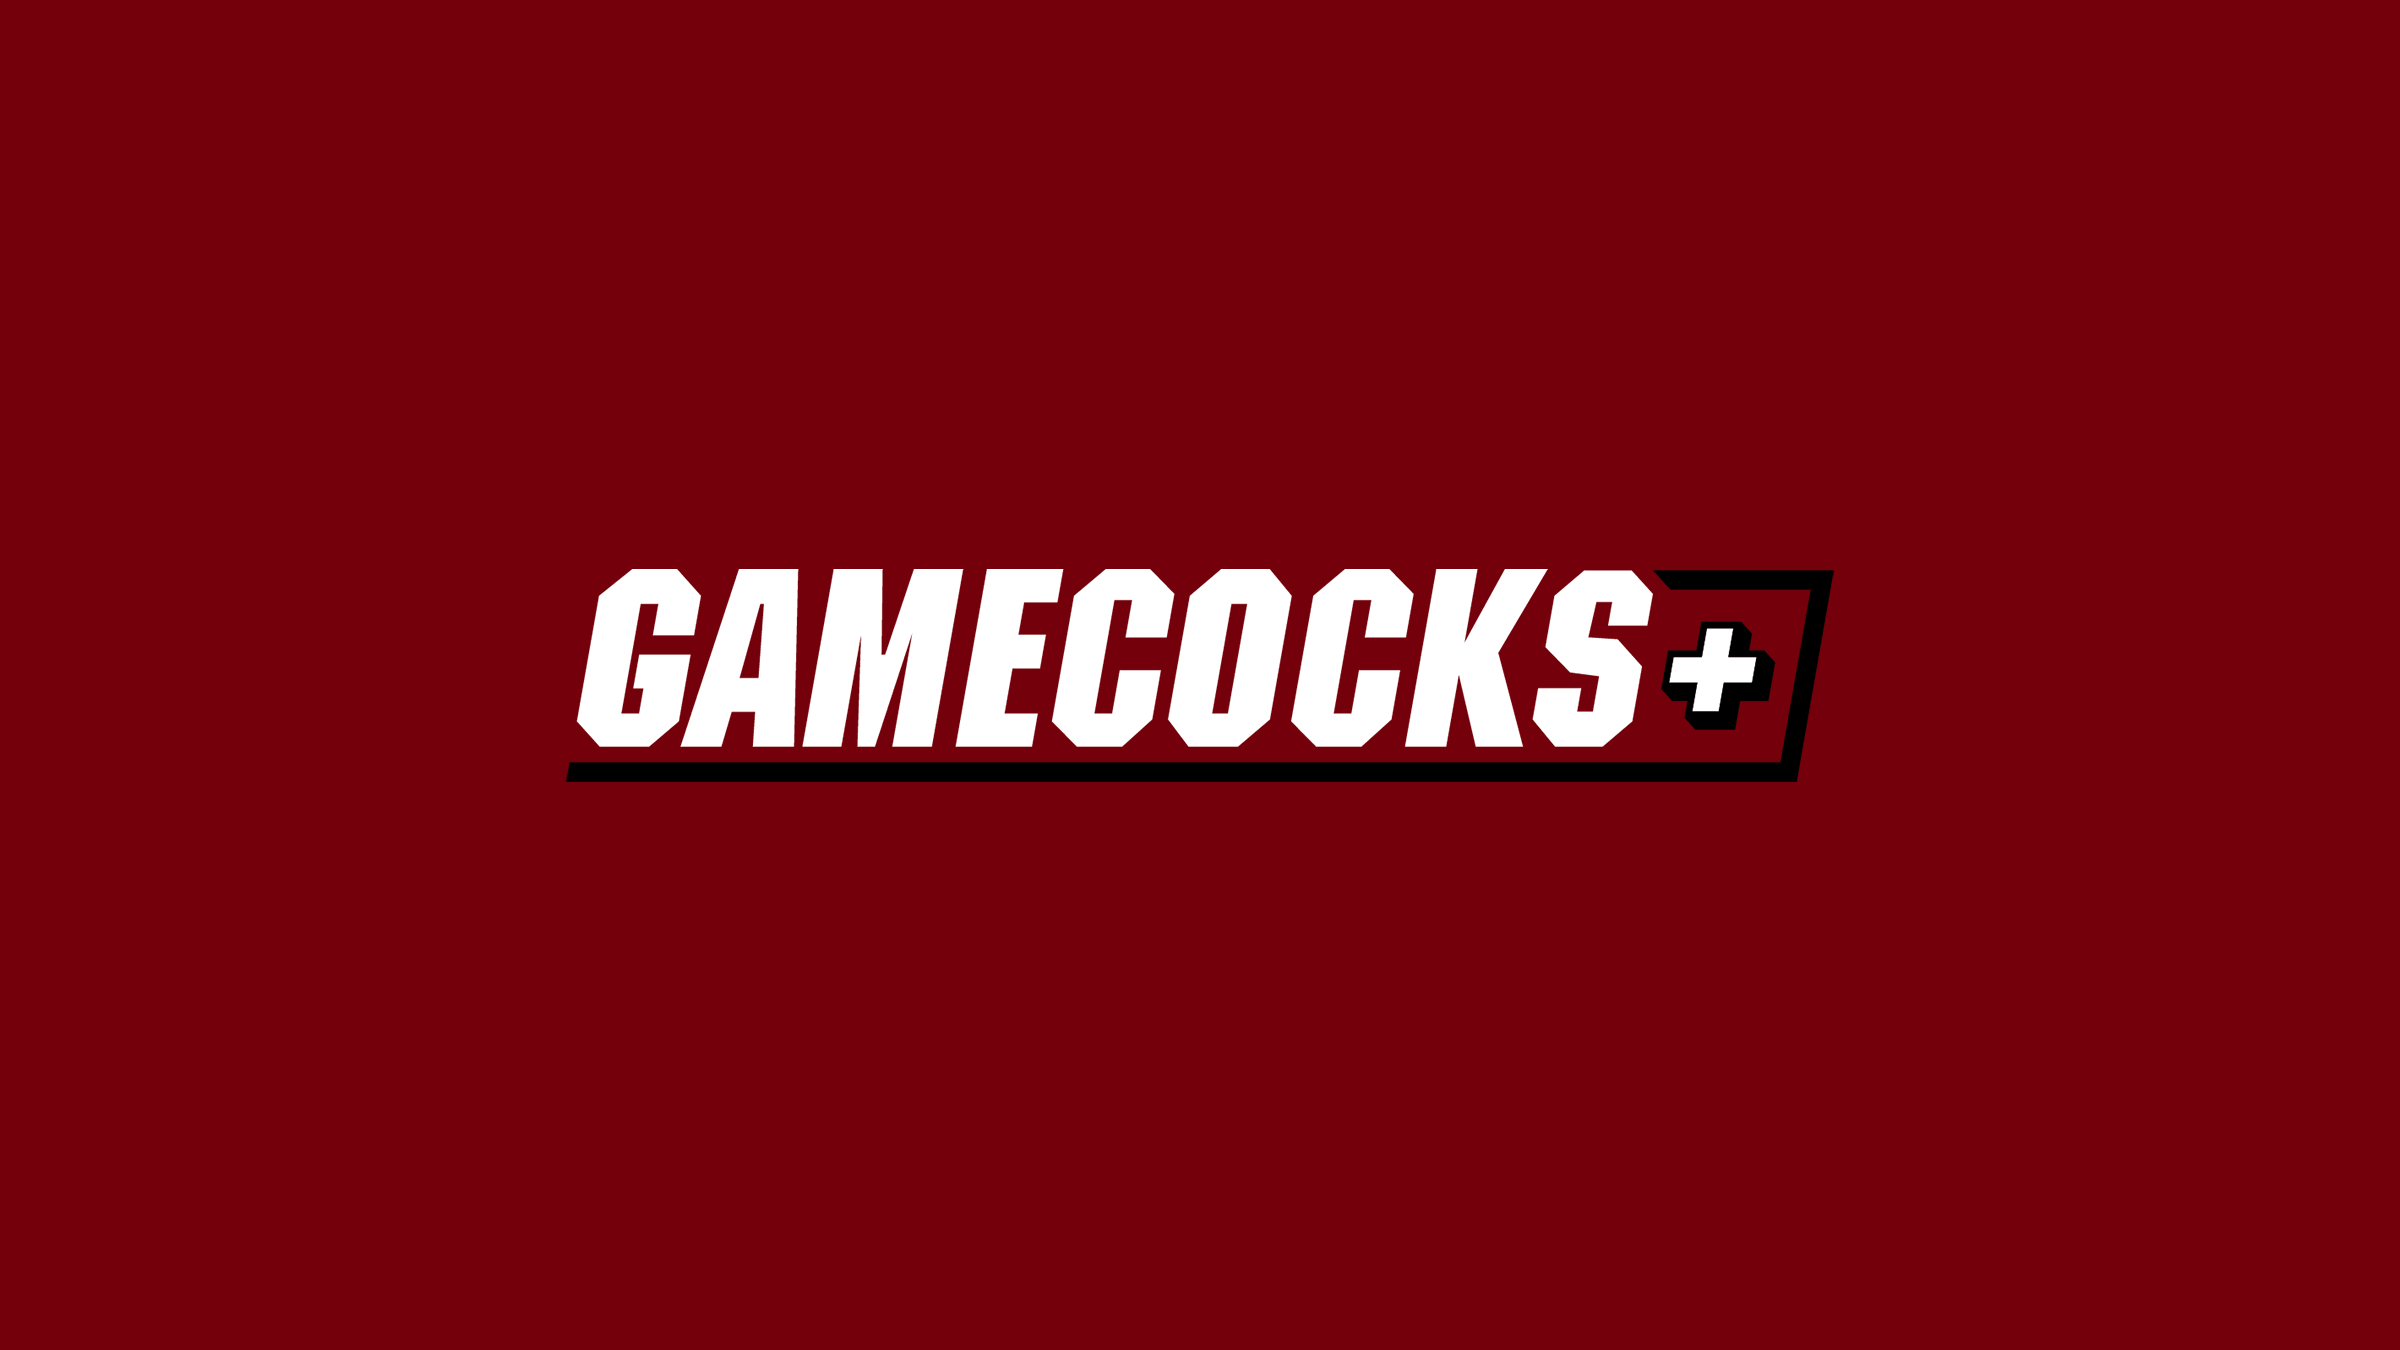 McLean-Roberts-Logo-Design-South-Carolina-Athletics-Gamecocks+.png